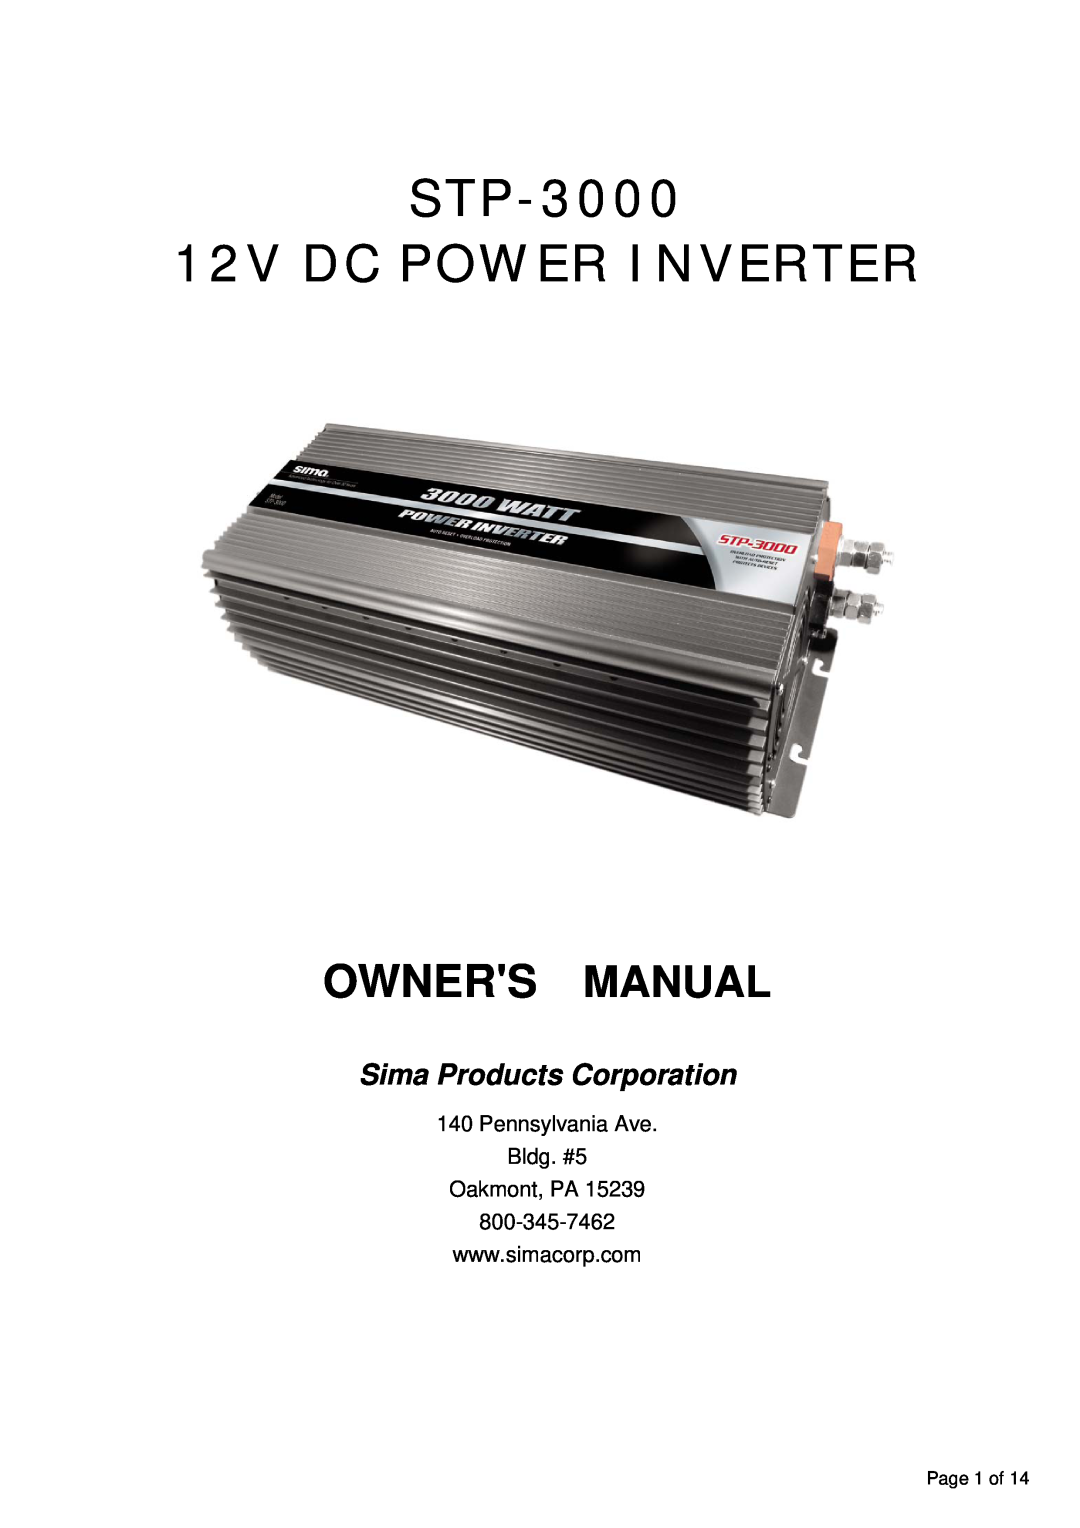 Sima Products owner manual Pennsylvania Ave Bldg. #5 Oakmont, PA, STP-3000 12V DC POWER INVERTER 